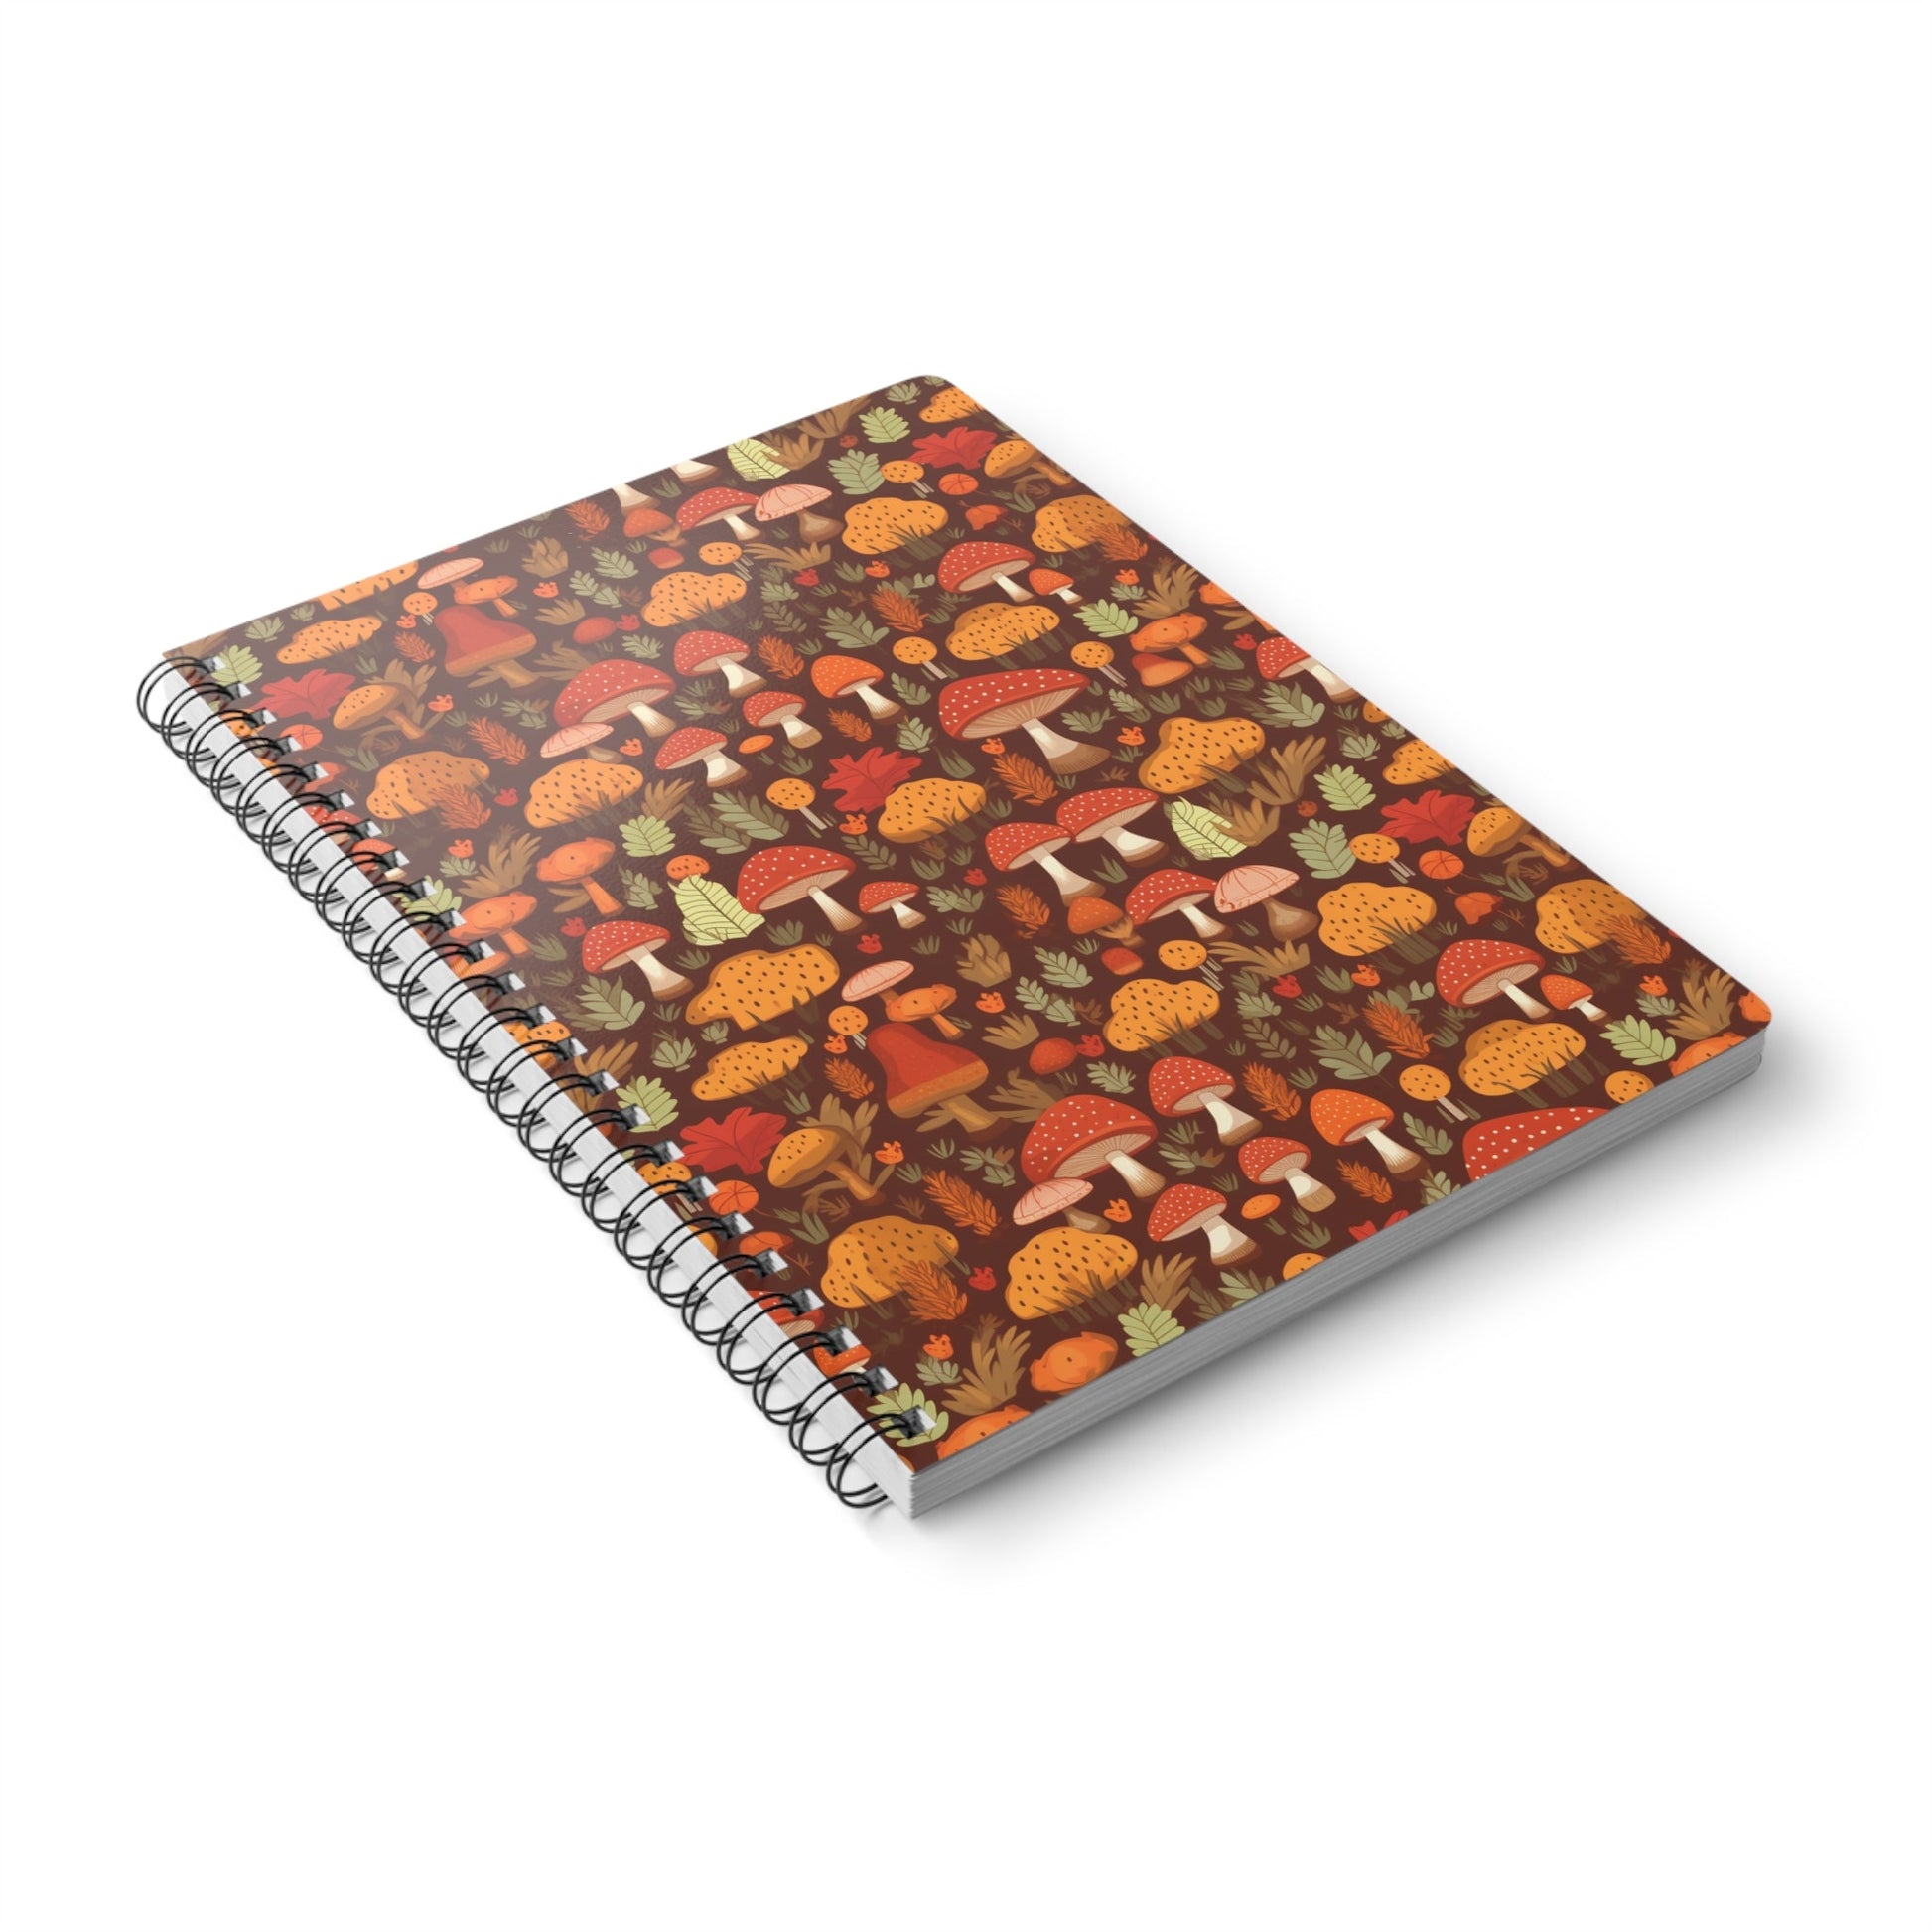 Autumn Spore Wonderland: Enchanting Mushroom and Leaf Designs - Notebook (A5) - Pattern Symphony